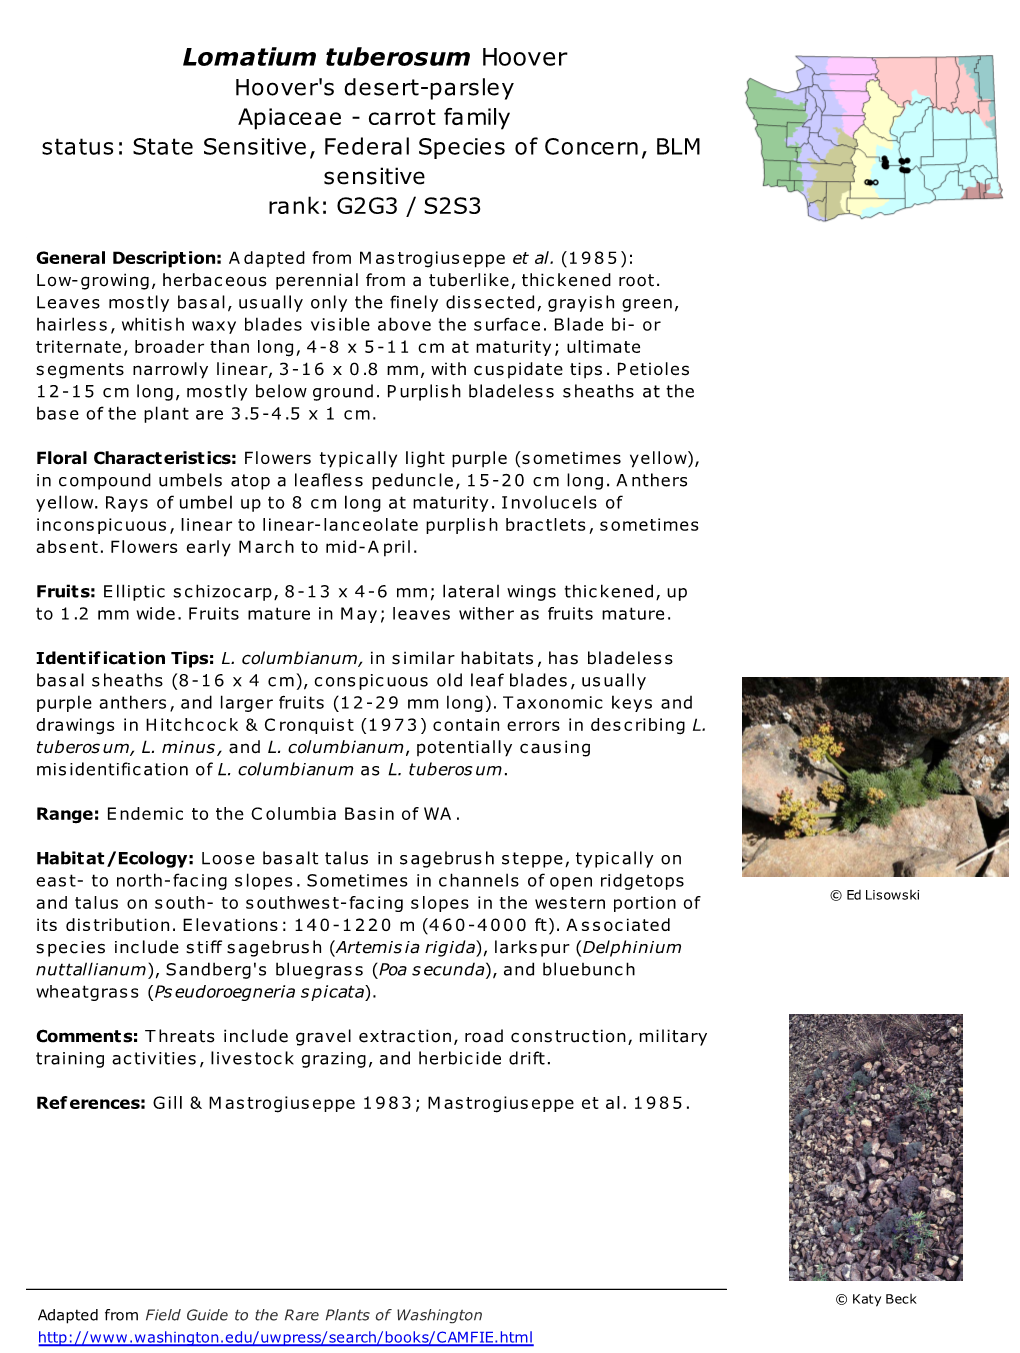 Lomatium Tuberosum Hoover Hoover's Desert-Parsley Apiaceae - Carrot Family Status: State Sensitive, Federal Species of Concern, BLM Sensitive Rank: G2G3 / S2S3